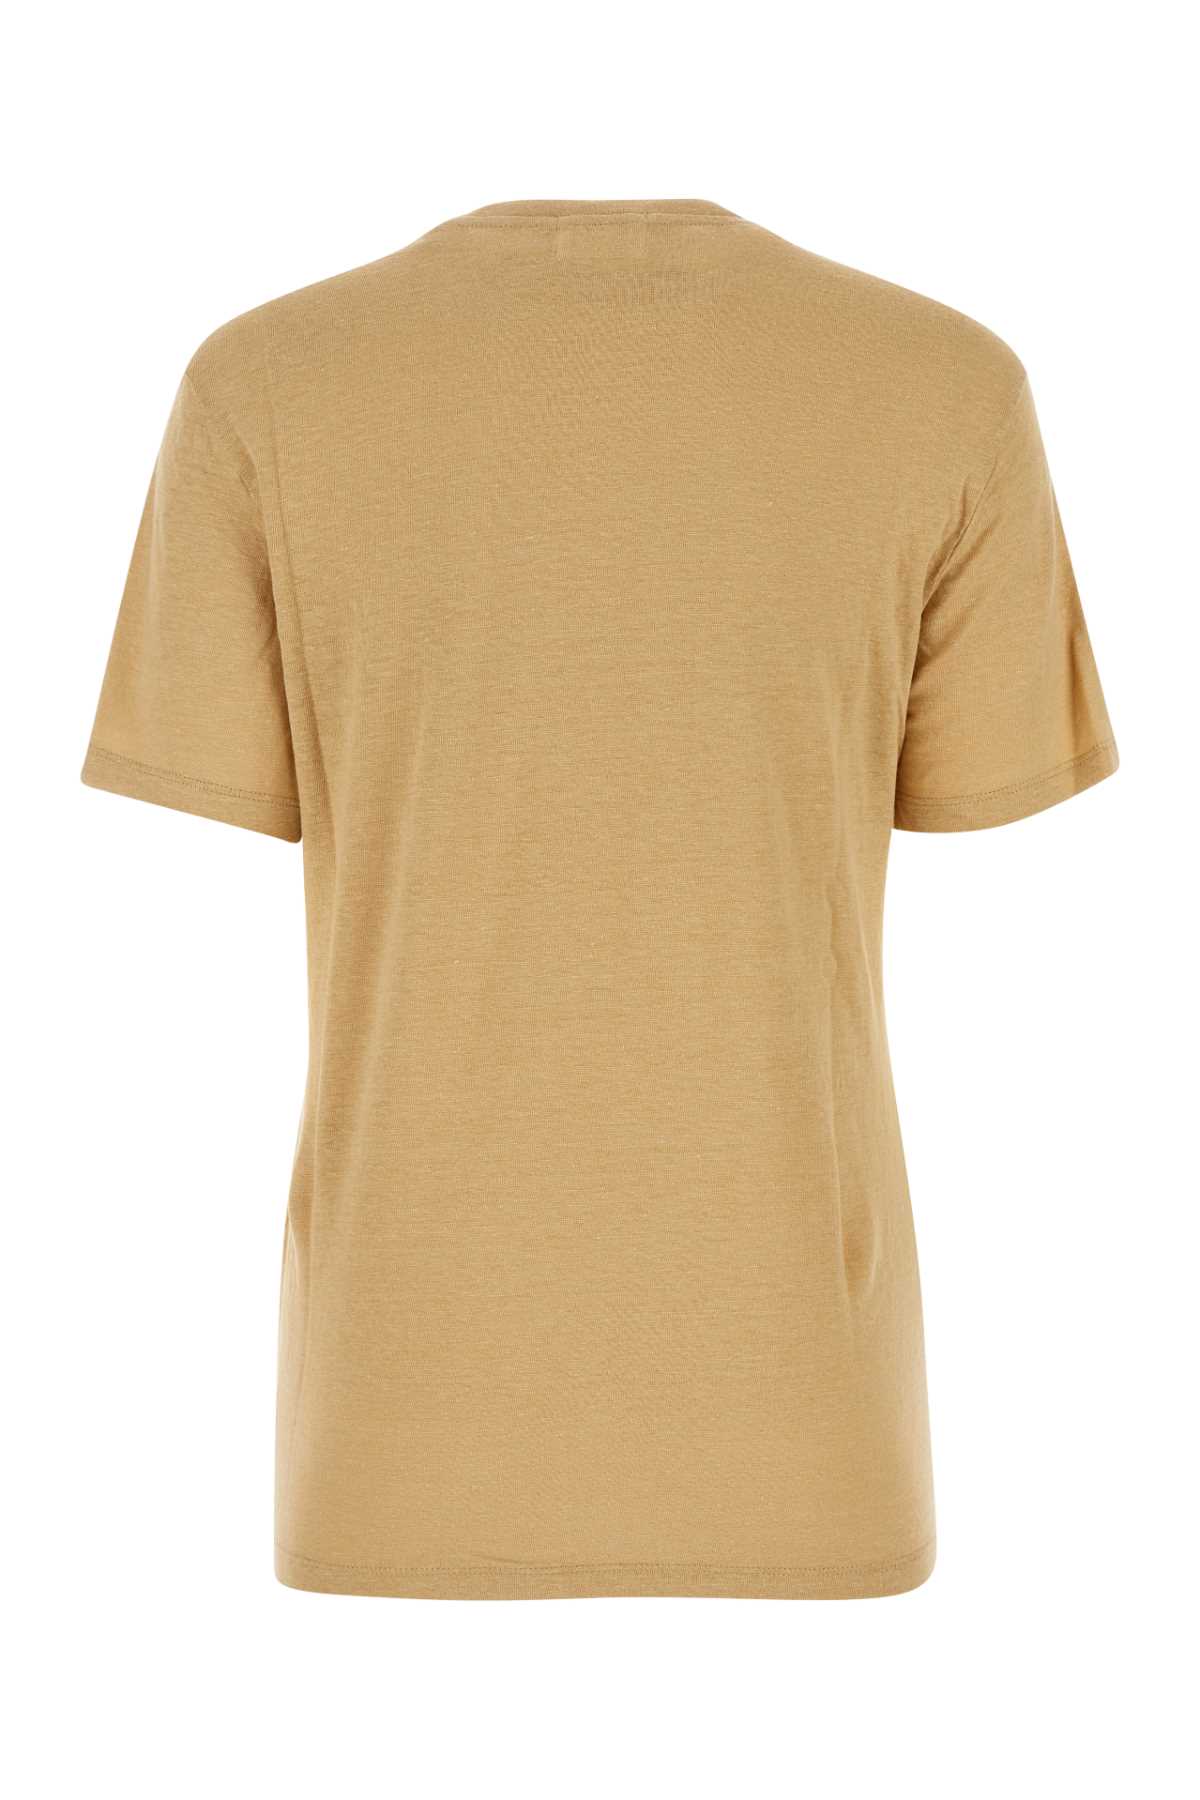 Marant Etoile Mustard Linen Zewel T-shirt In Saharalightgold